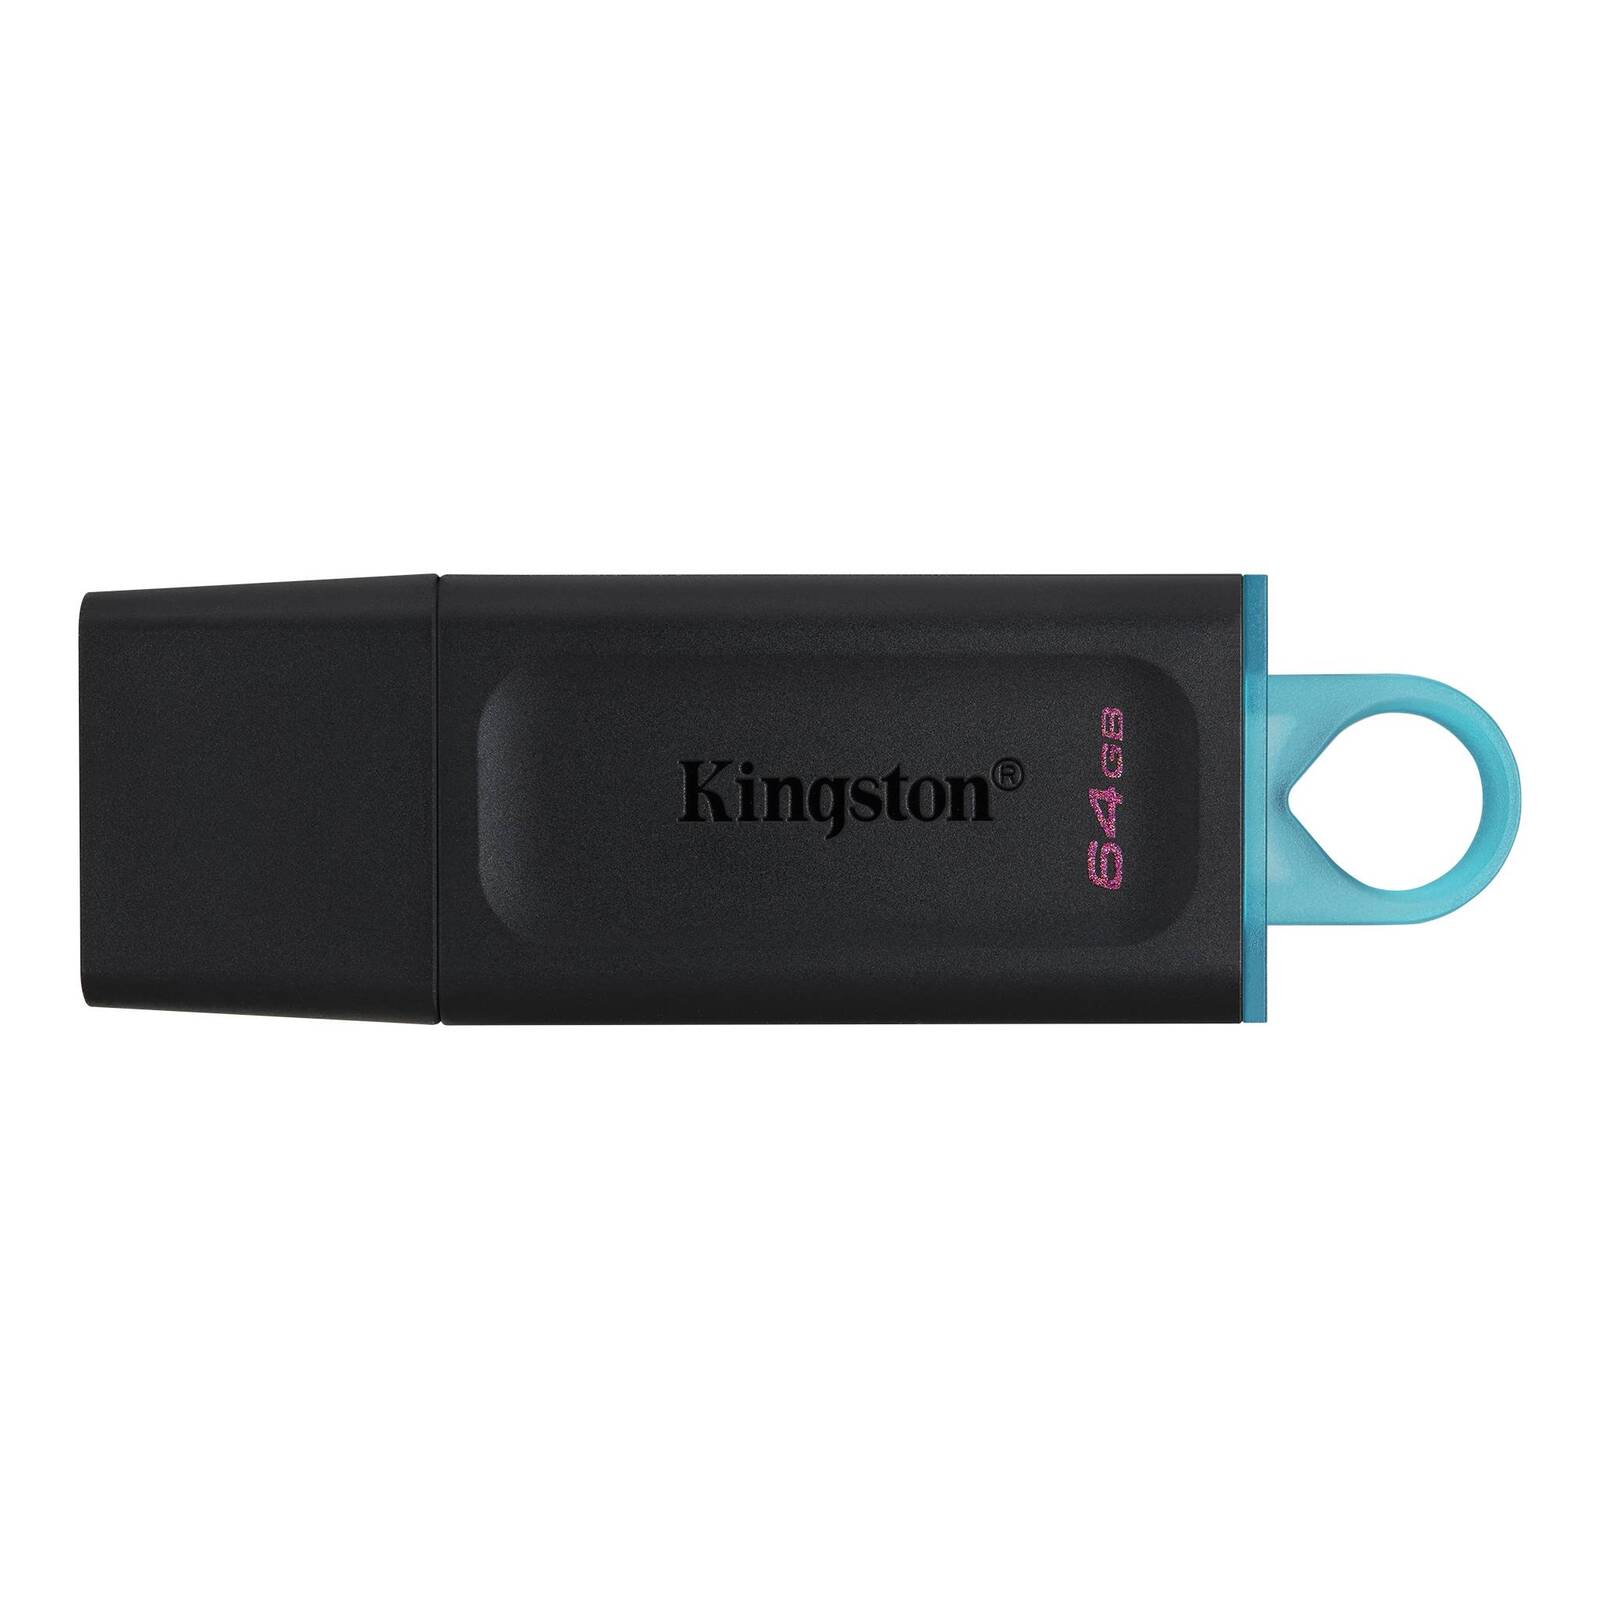 Kingston 64GB USB3.0 Flash Drive Memory Stick Thumb Key DataTraveler DT100G3 Retail Pack 5yrs warranty ~USK-DT100G3-64G